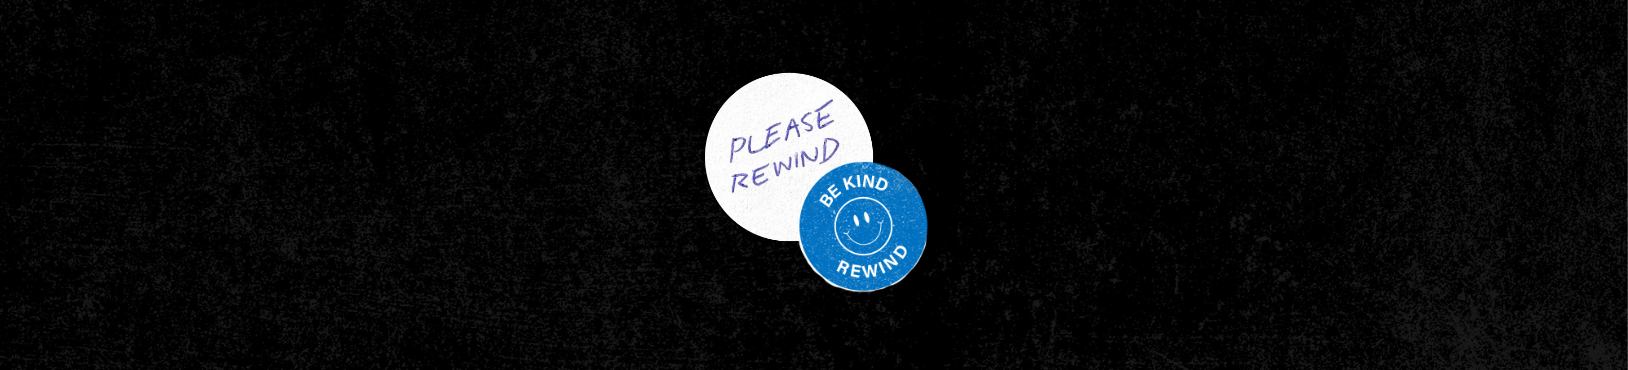 Be Kind, Rewind stickers